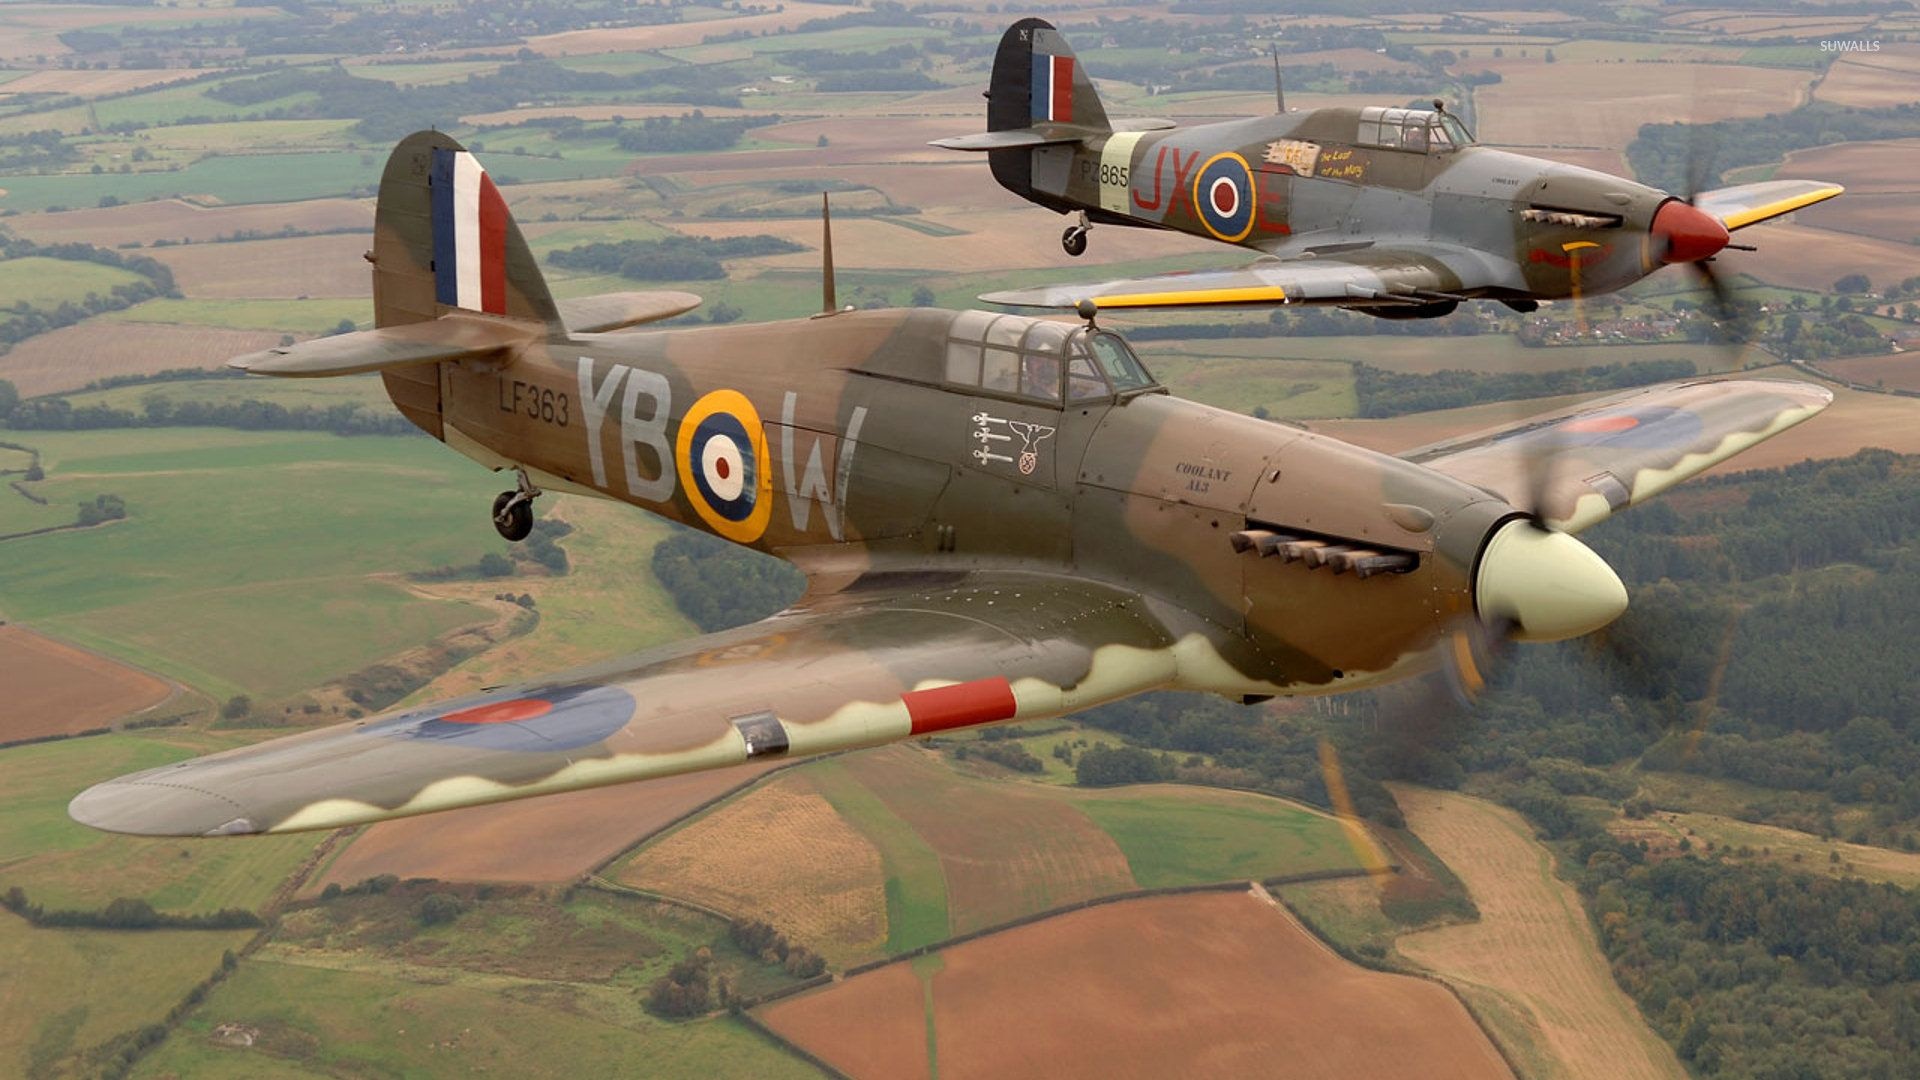 Hawker Hurricane wallpapers, Top free backgrounds, 1920x1080 Full HD Desktop